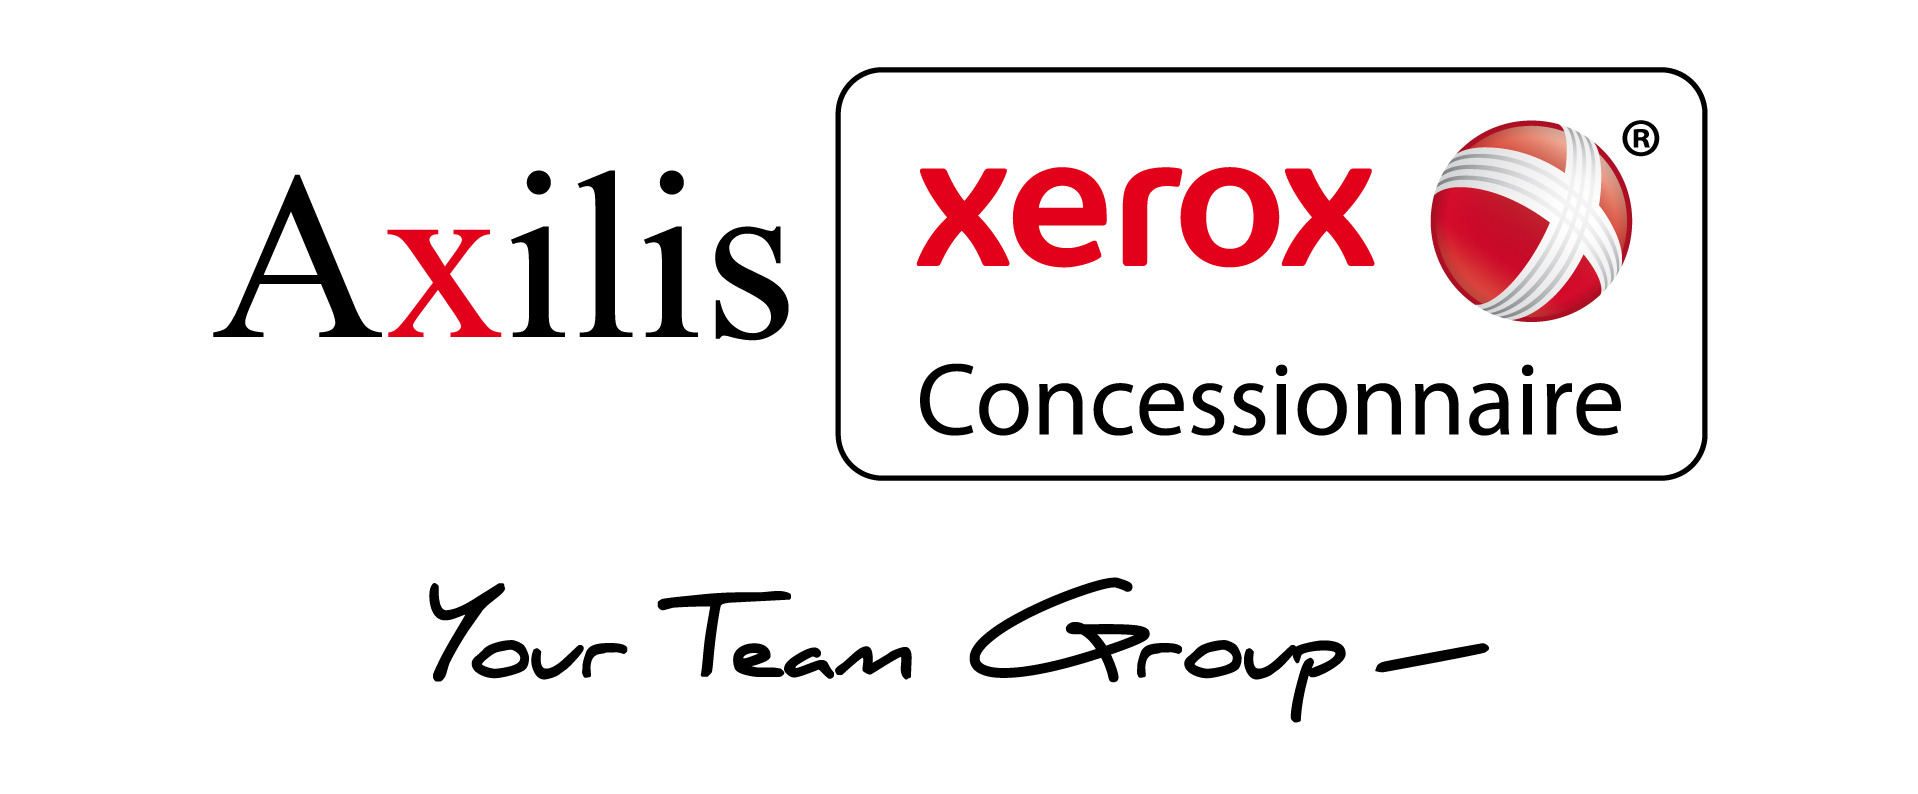 Axilis-Xerox YourTeamGroup